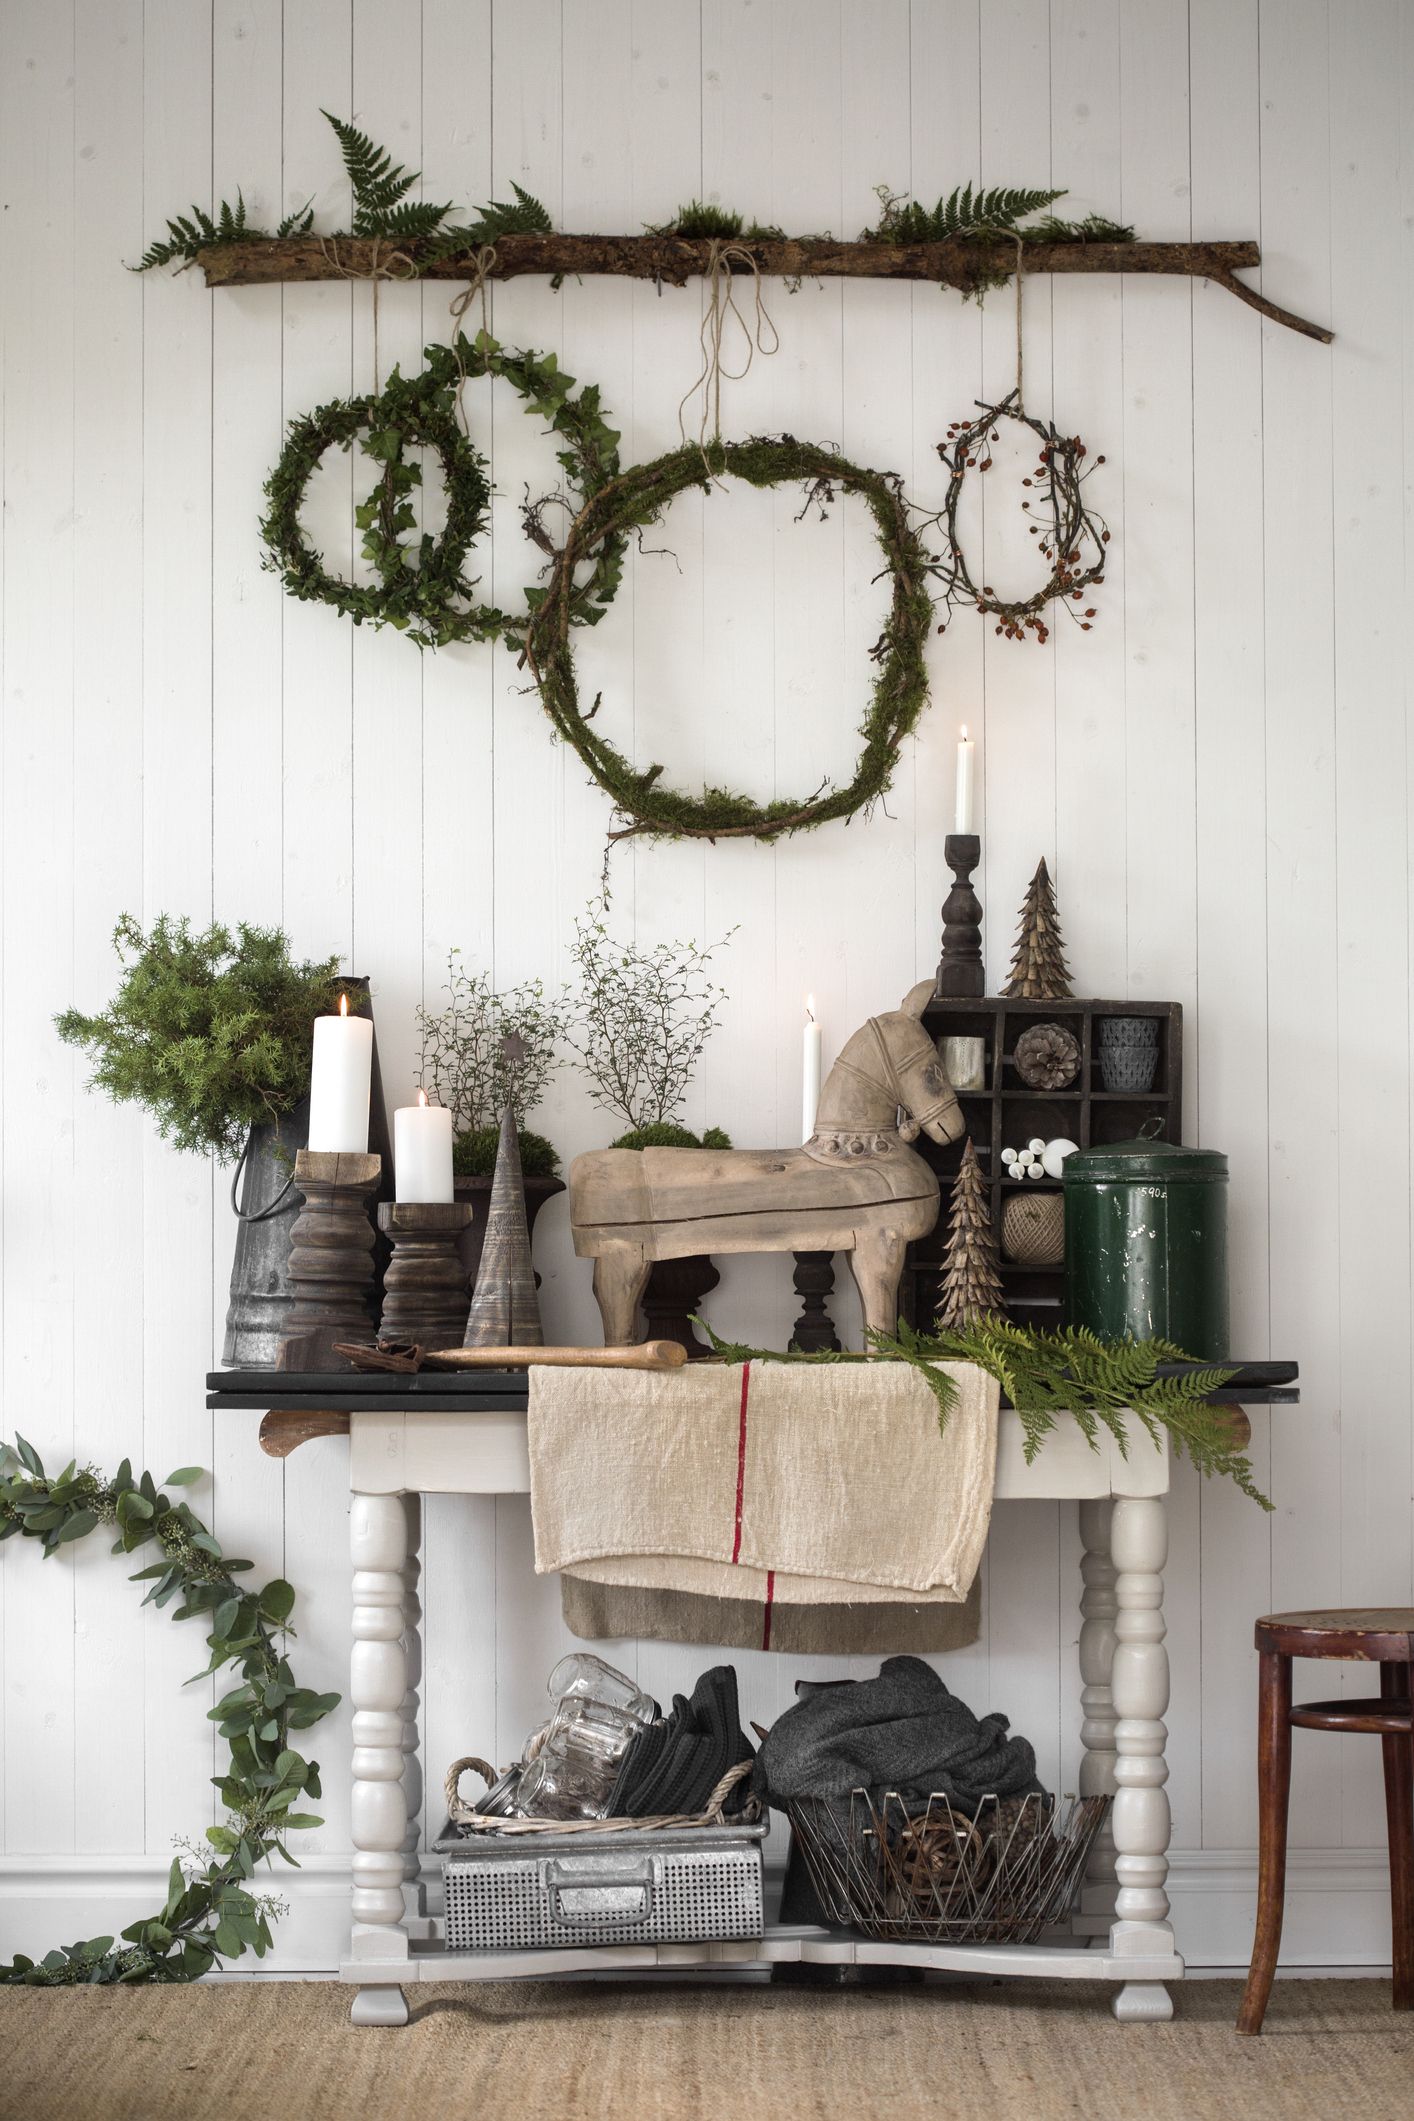 https://hips.hearstapps.com/hmg-prod/images/sweden-christmas-decoration-living-room-royalty-free-image-1567788242.jpg